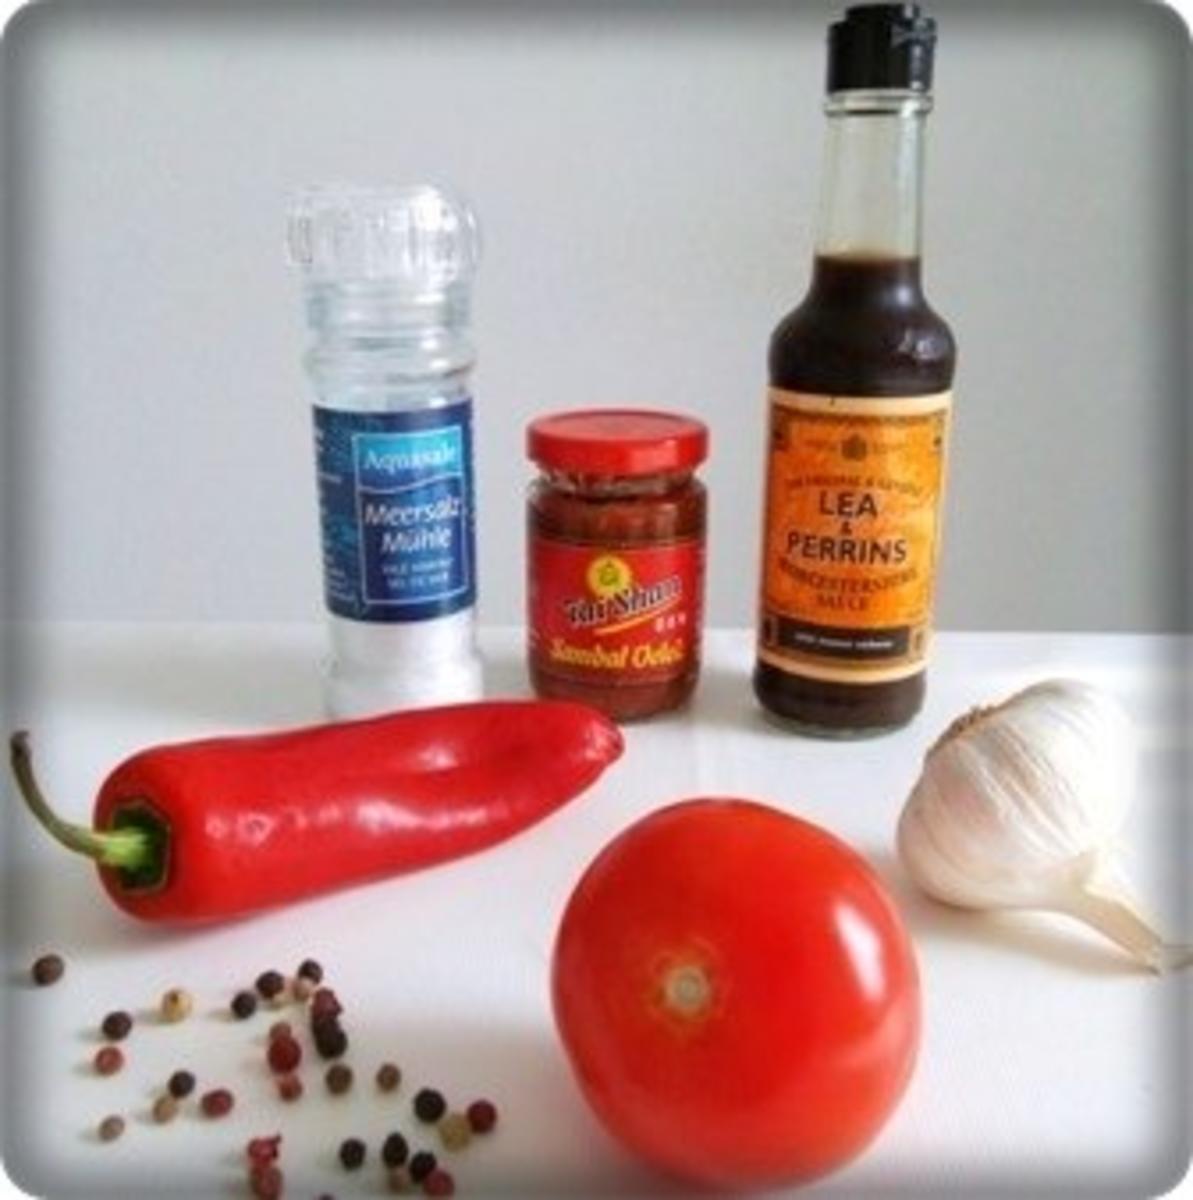 Paprika-Tomaten- Peperonisauce für Tagliatelle nach Art des Hauses - Rezept - Bild Nr. 5